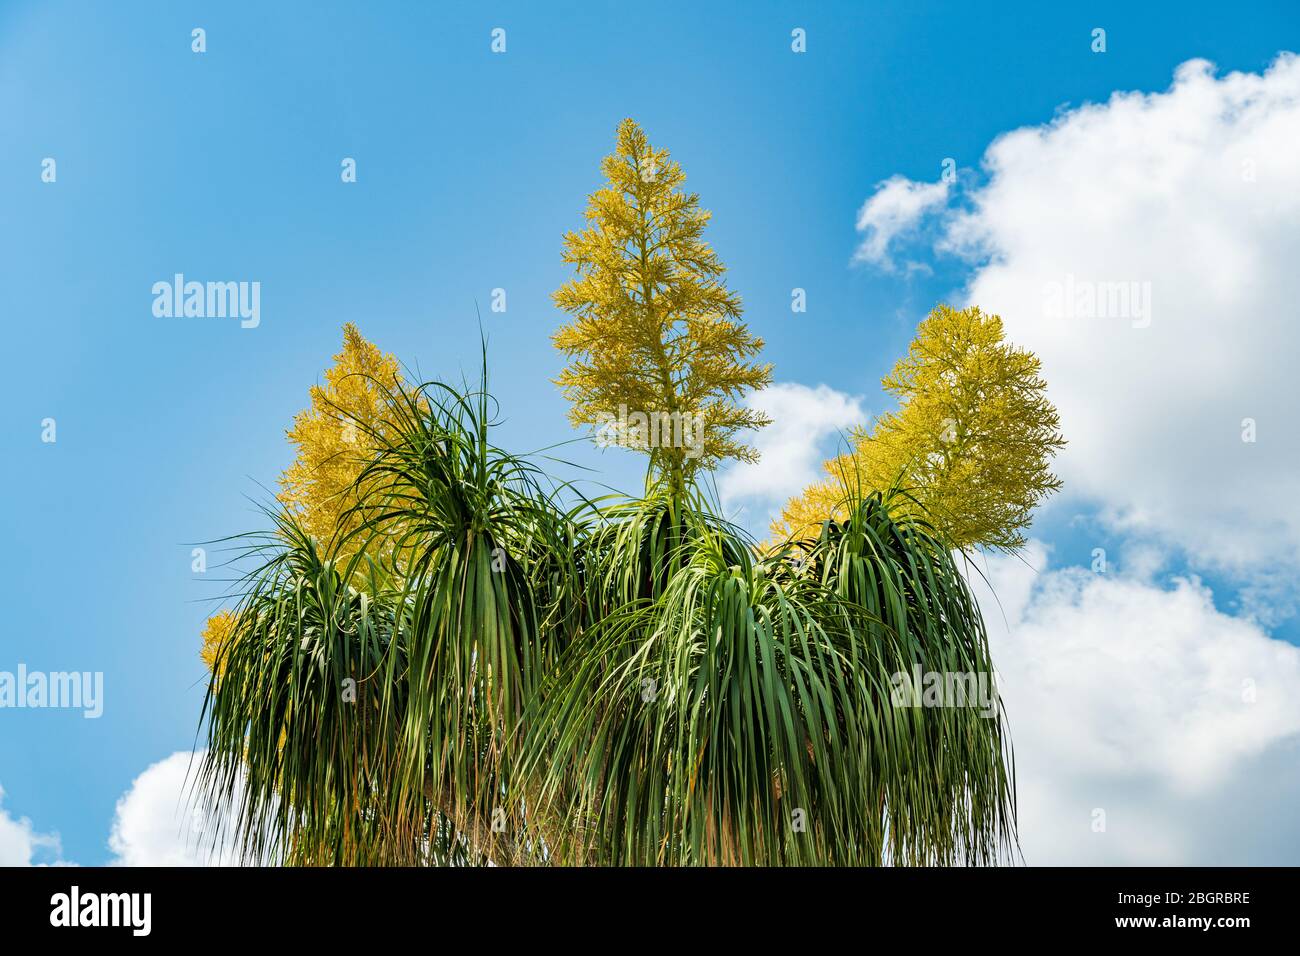 Pferdeschwanz-Palme a.k.a. Elefantenfuß (Beaucarnea recurvata) mit gelben Blüten - Pembroke Pines, Florida, USA Stockfoto